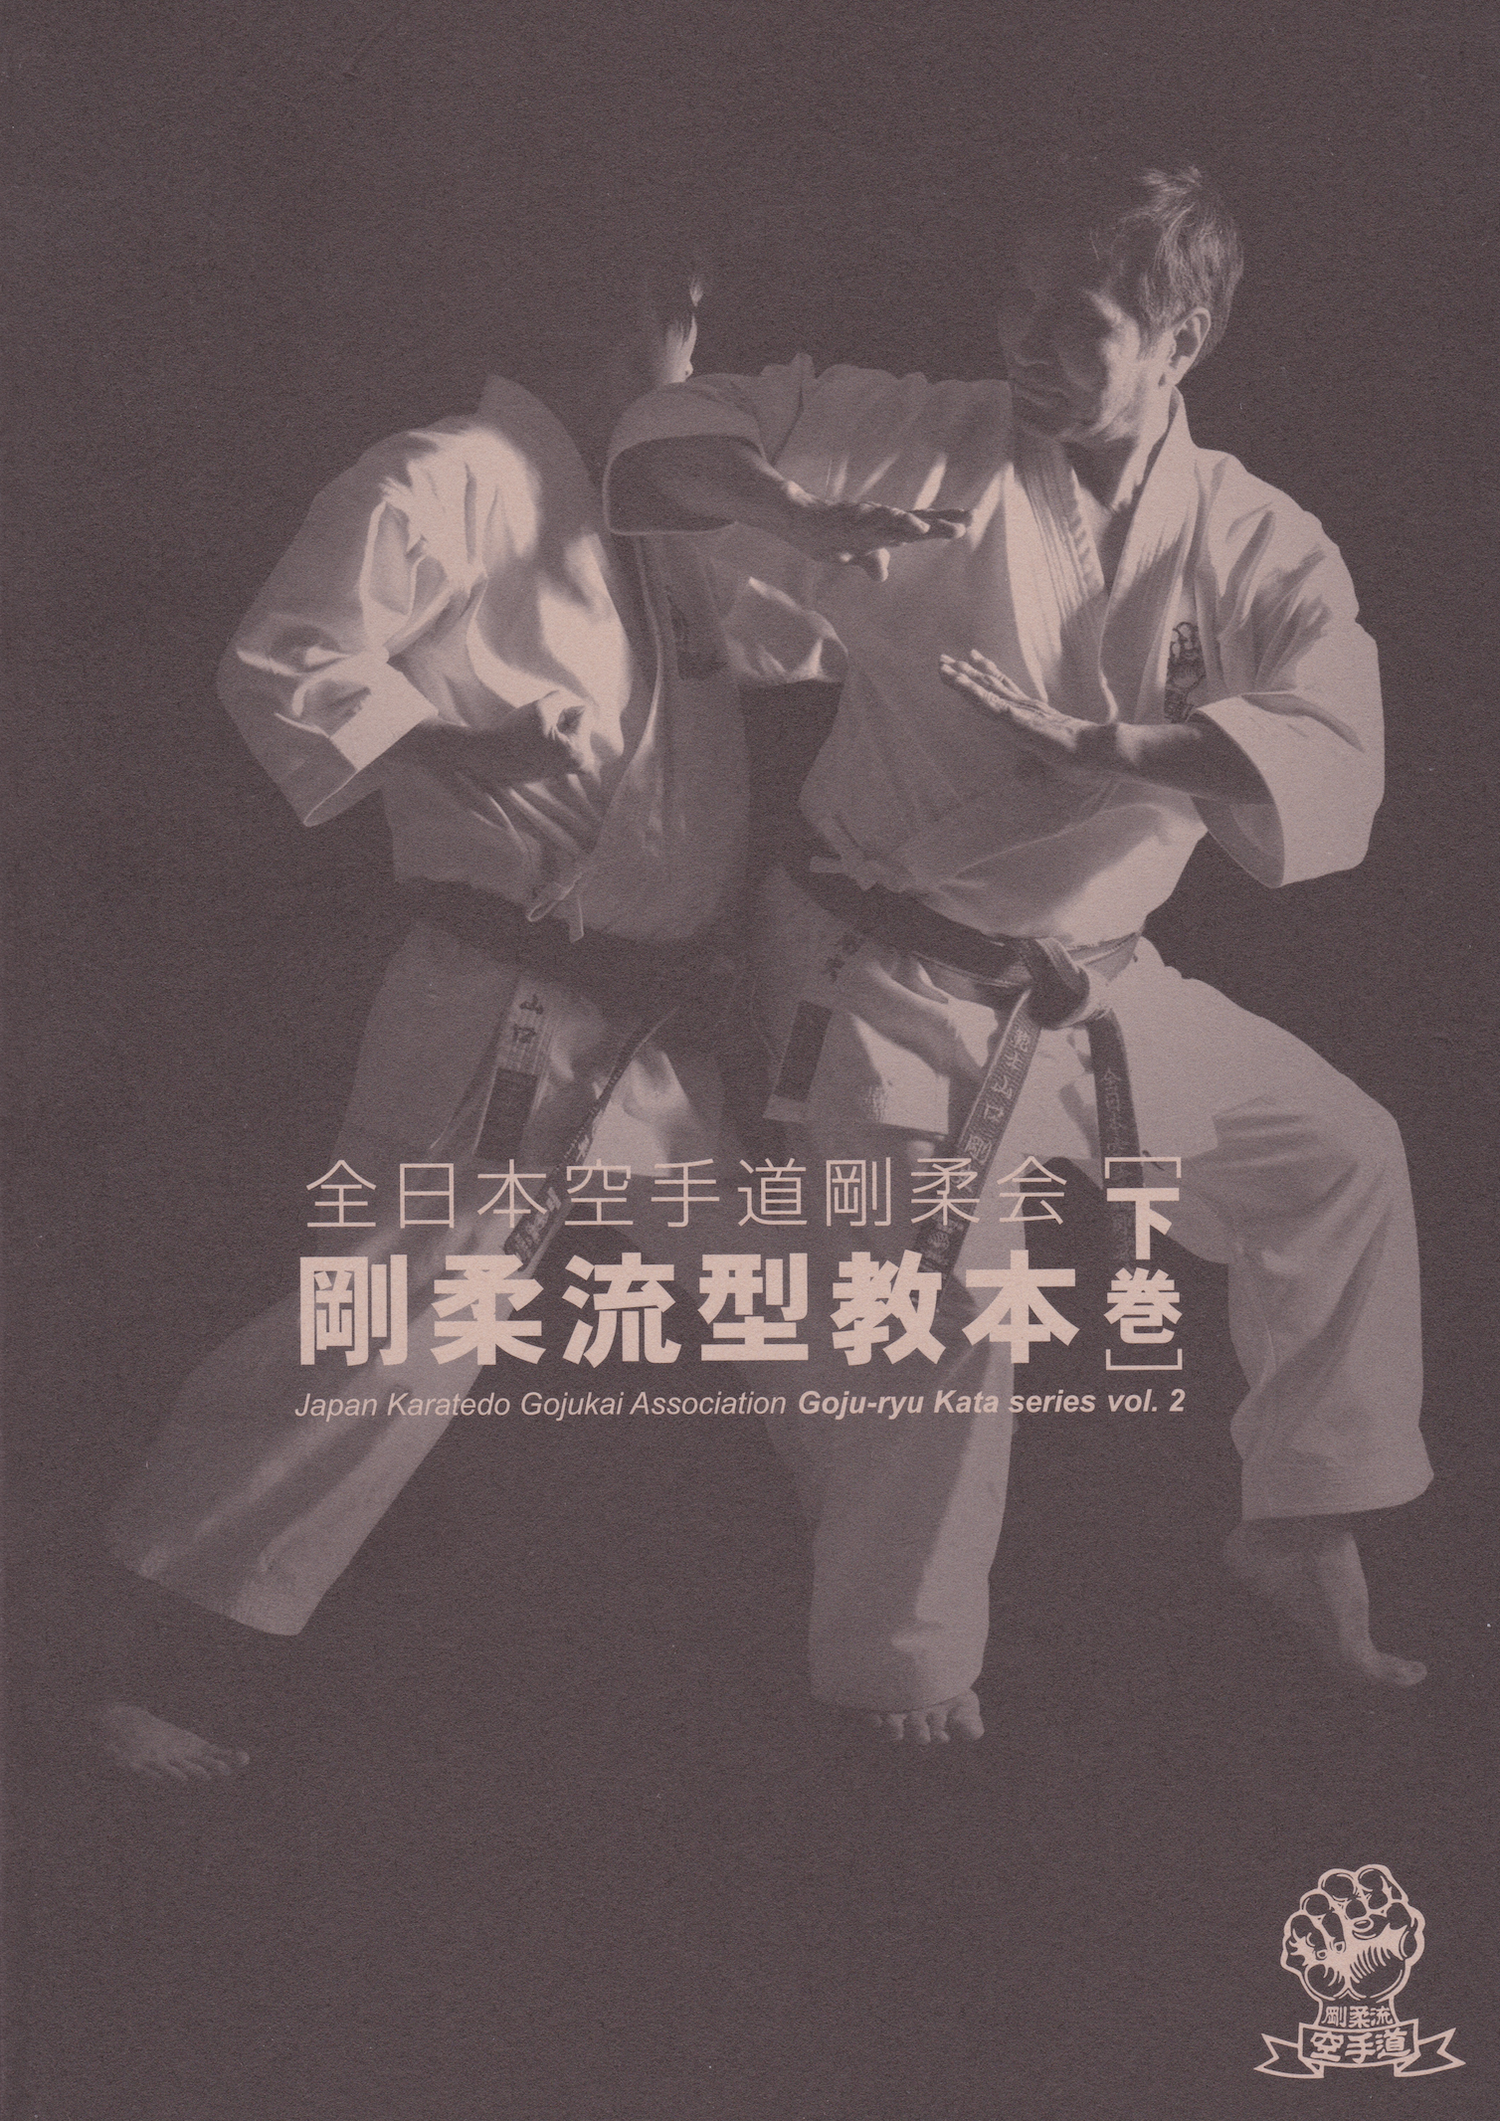 Goju Ryu Kata Series Book 2 by Japan Karatedo Gojukai Association